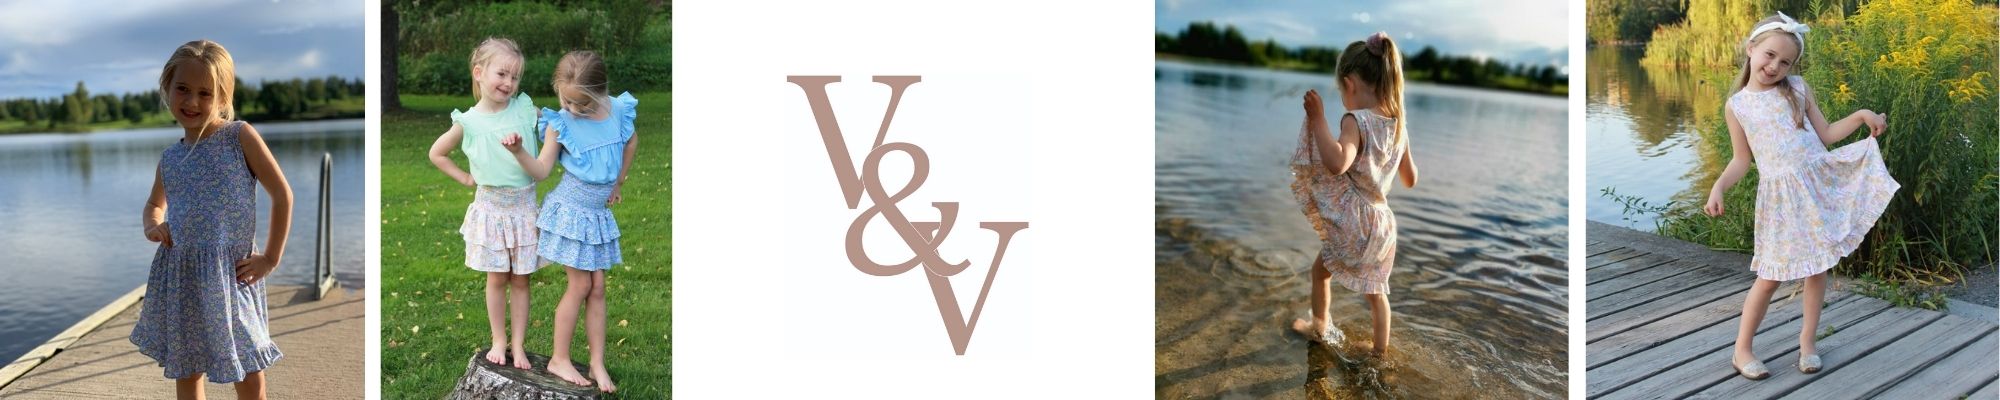 Vilje & Ve banner